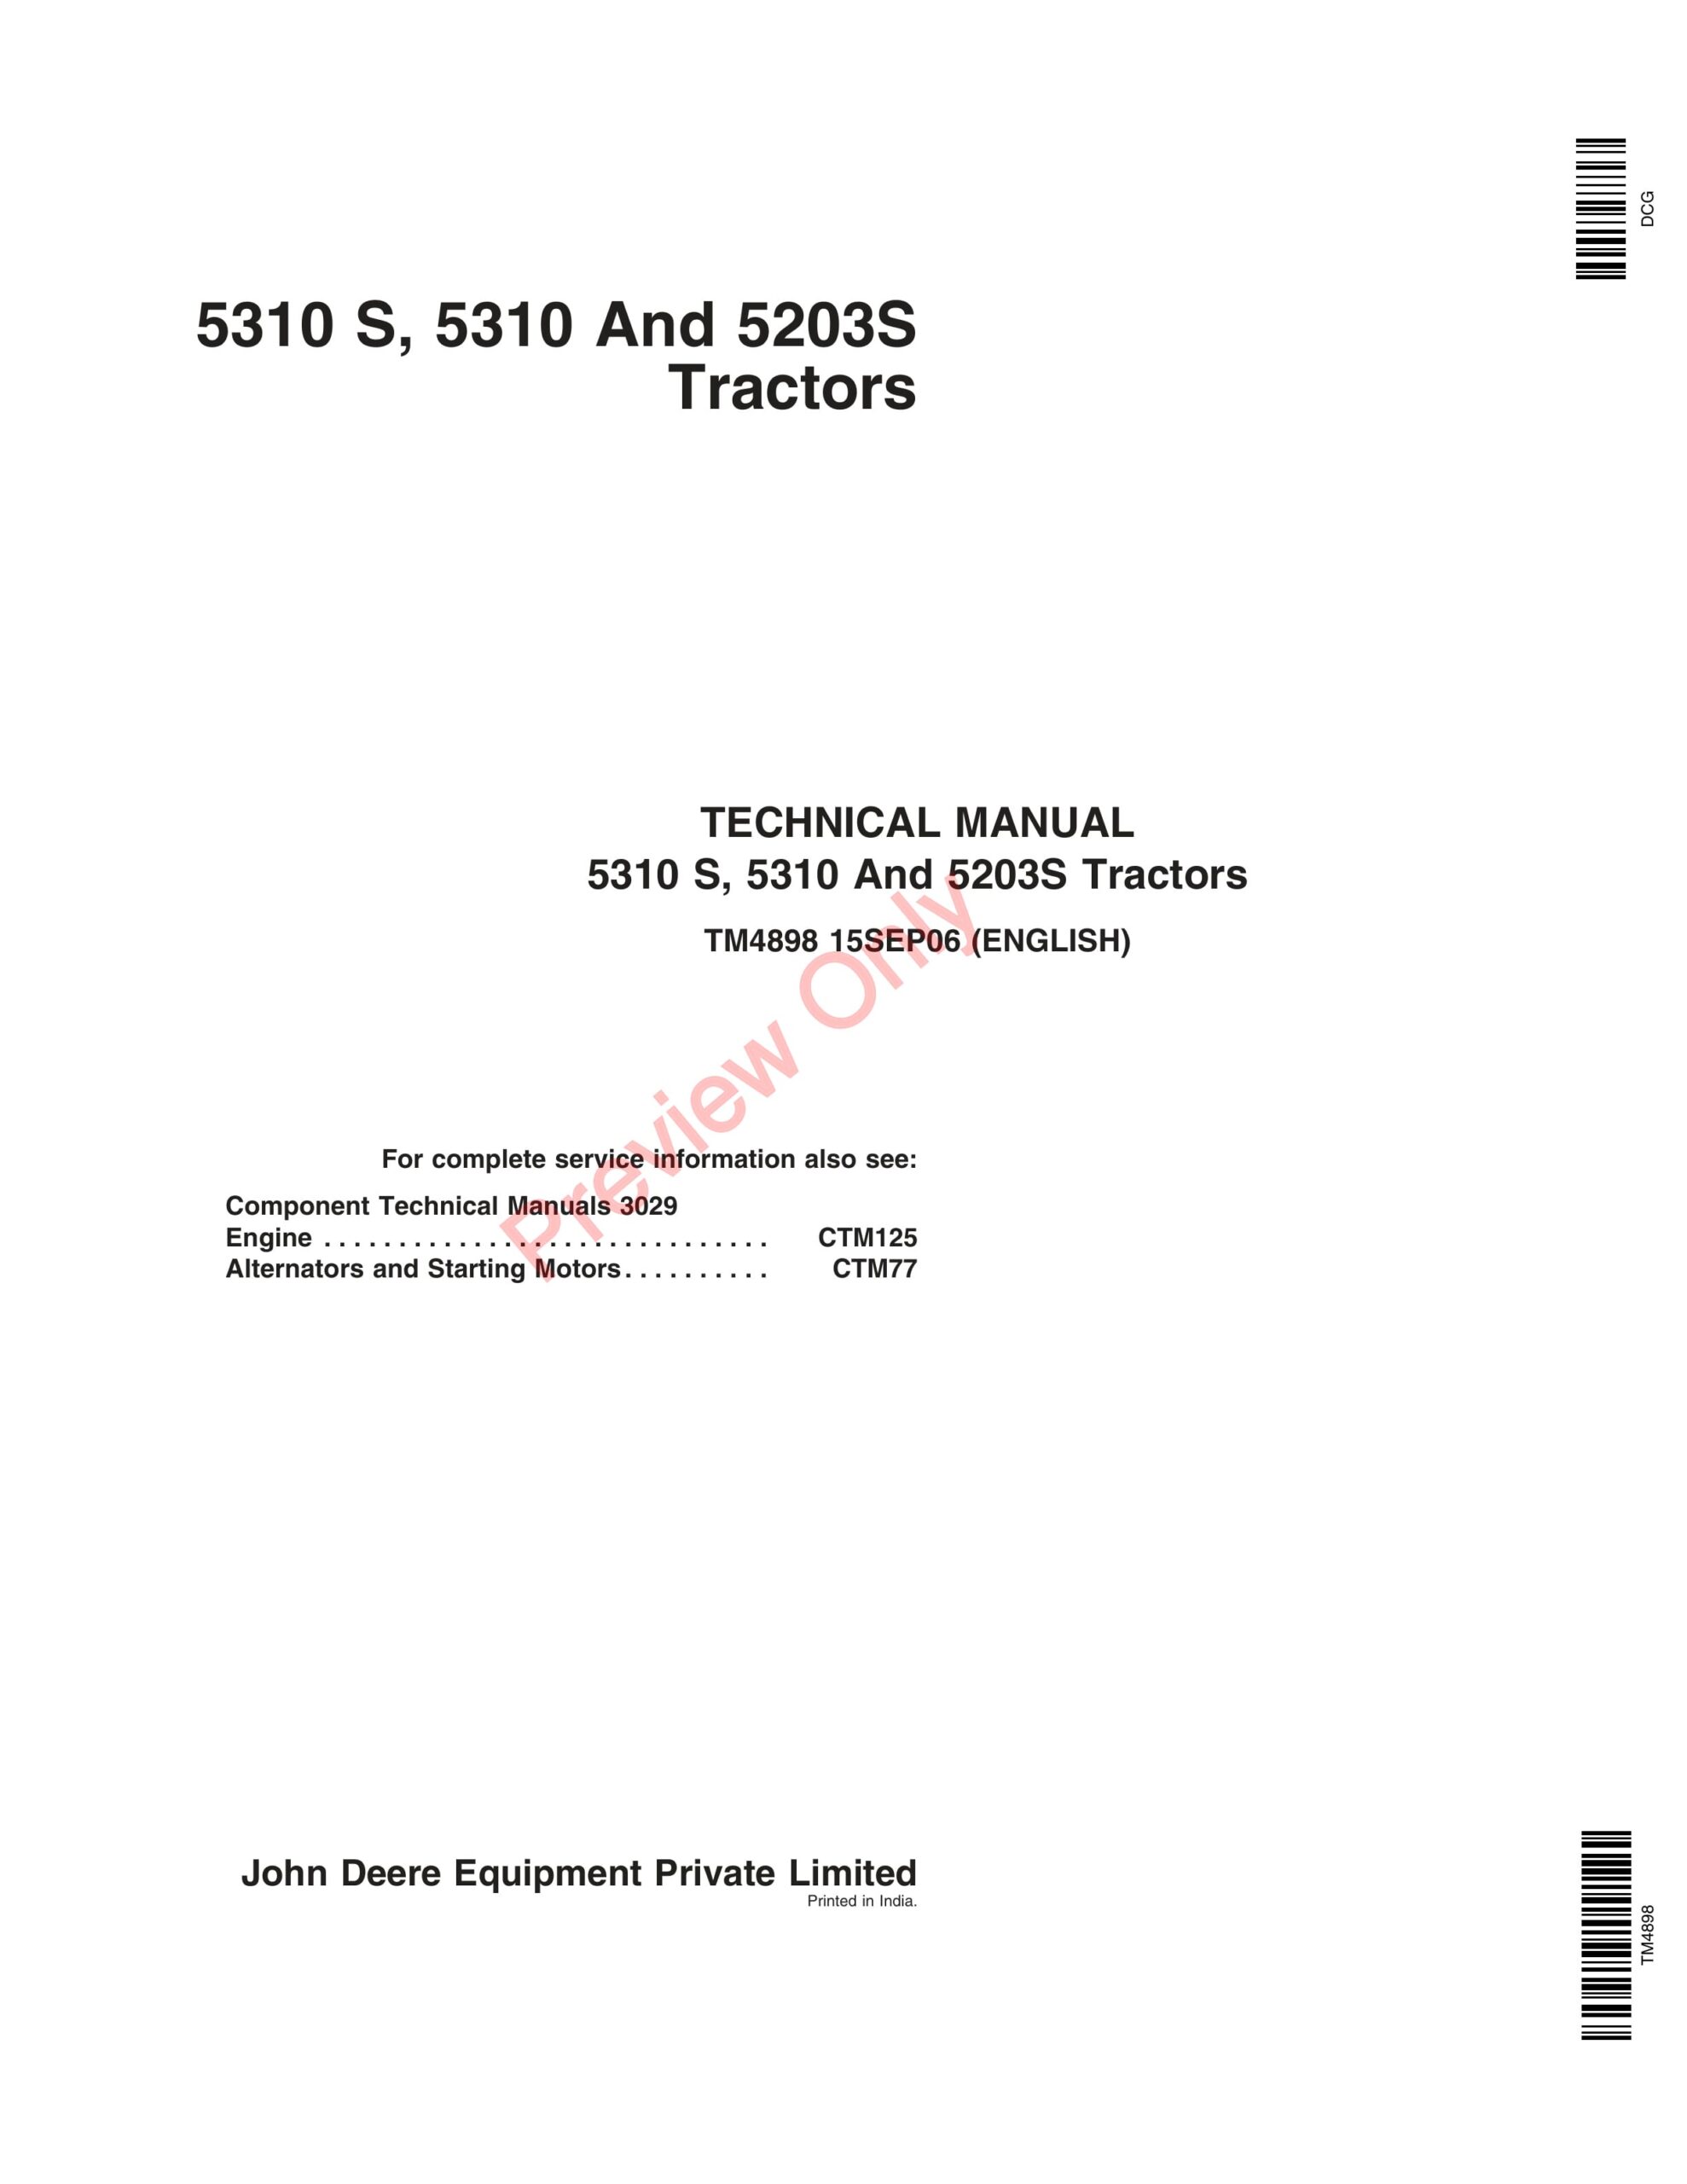 John Deere 5203S, 5310, 5310S Tractor Technical Manual TM4898 15SEP06-1